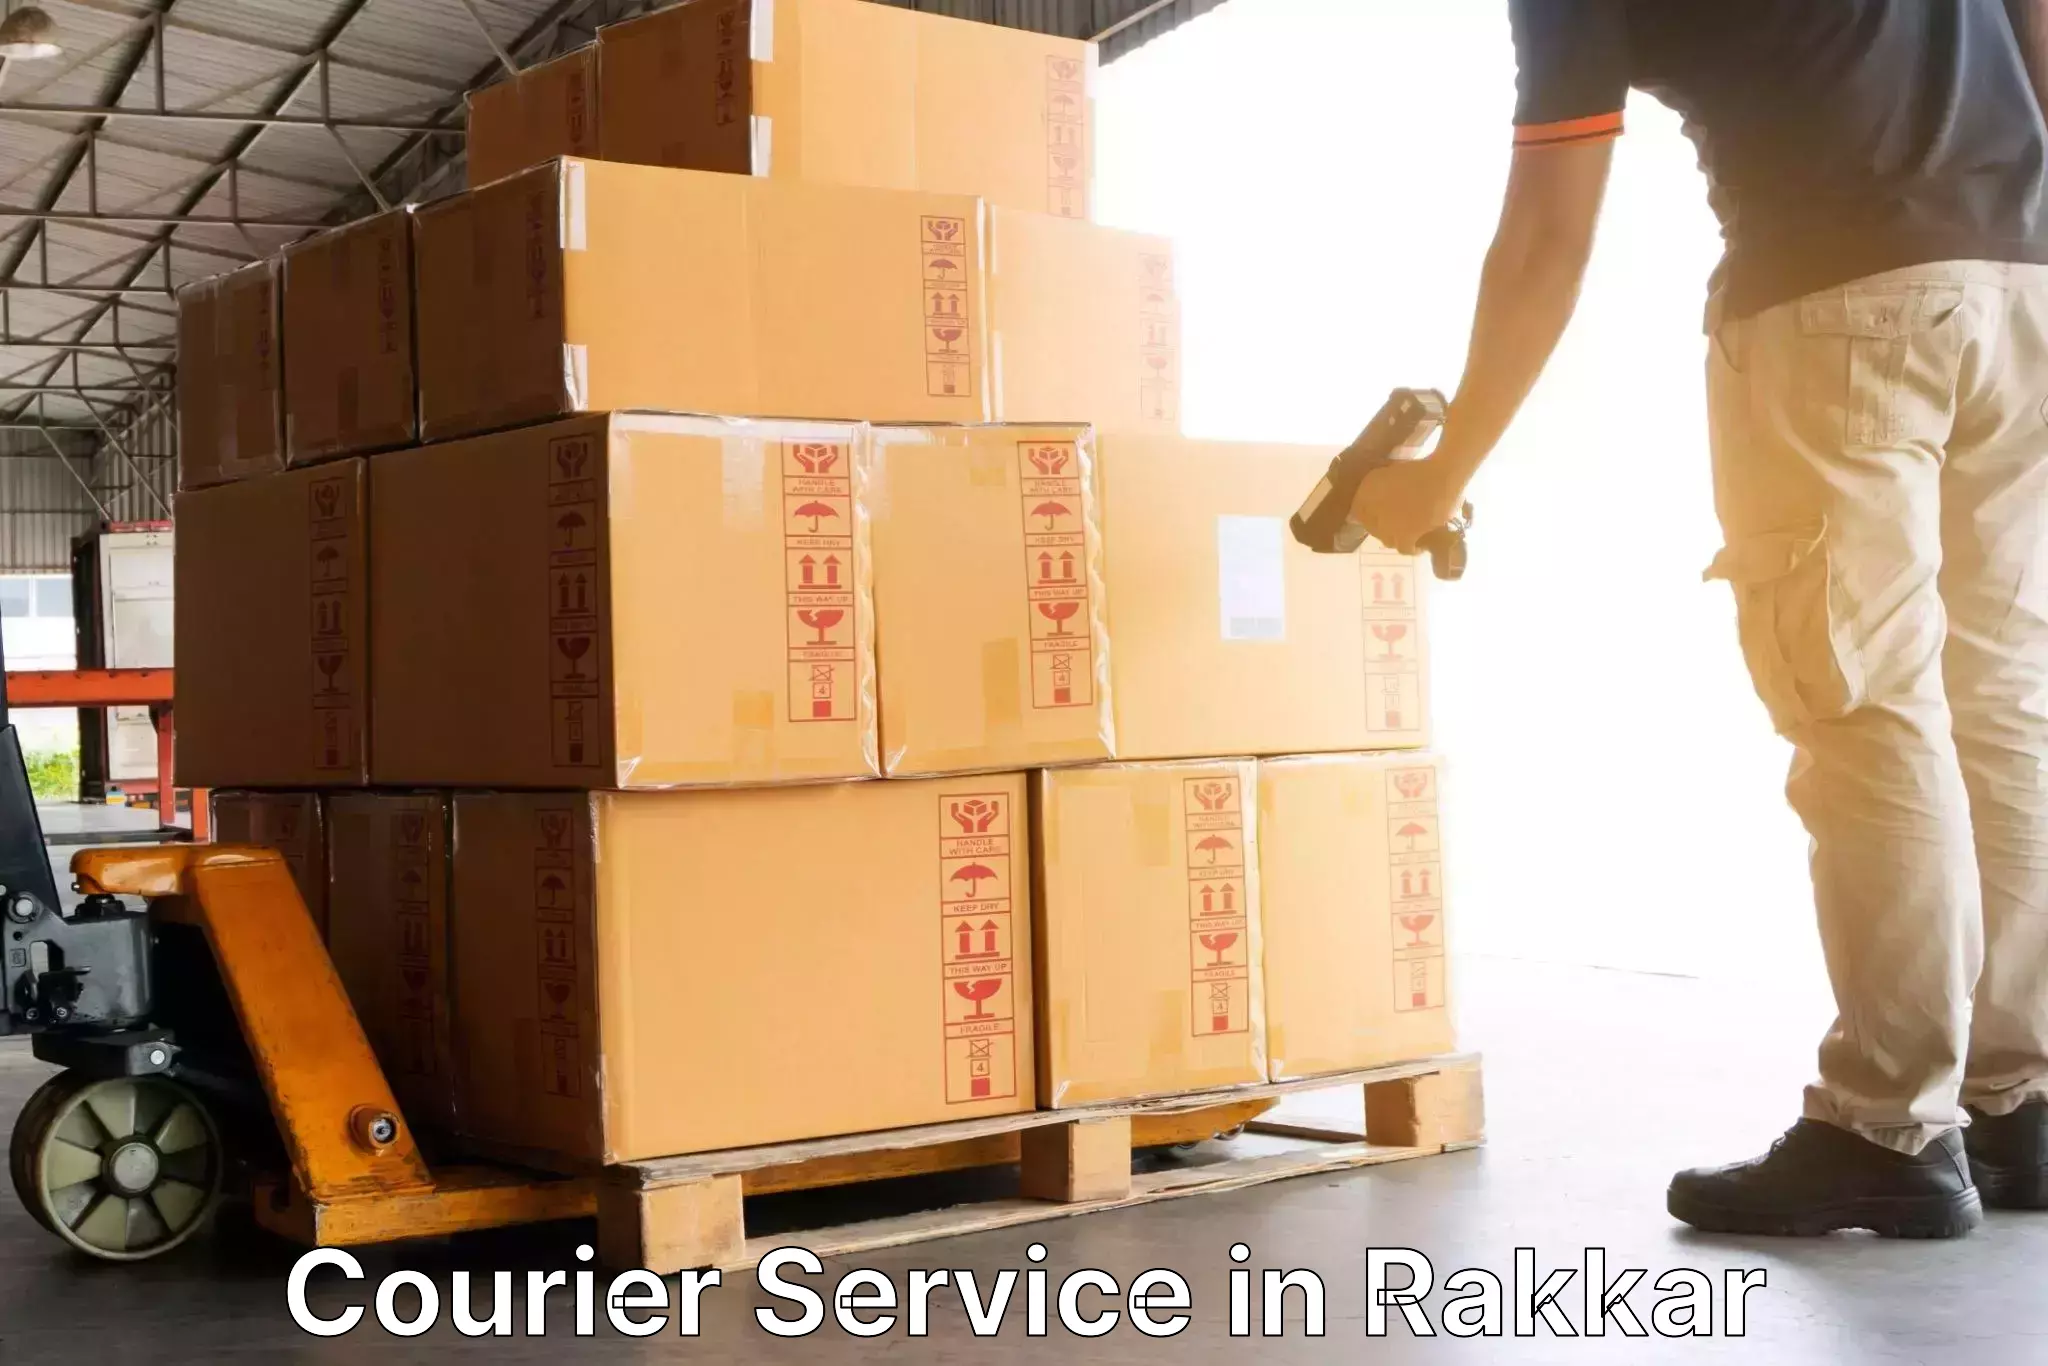 High-speed delivery in Rakkar